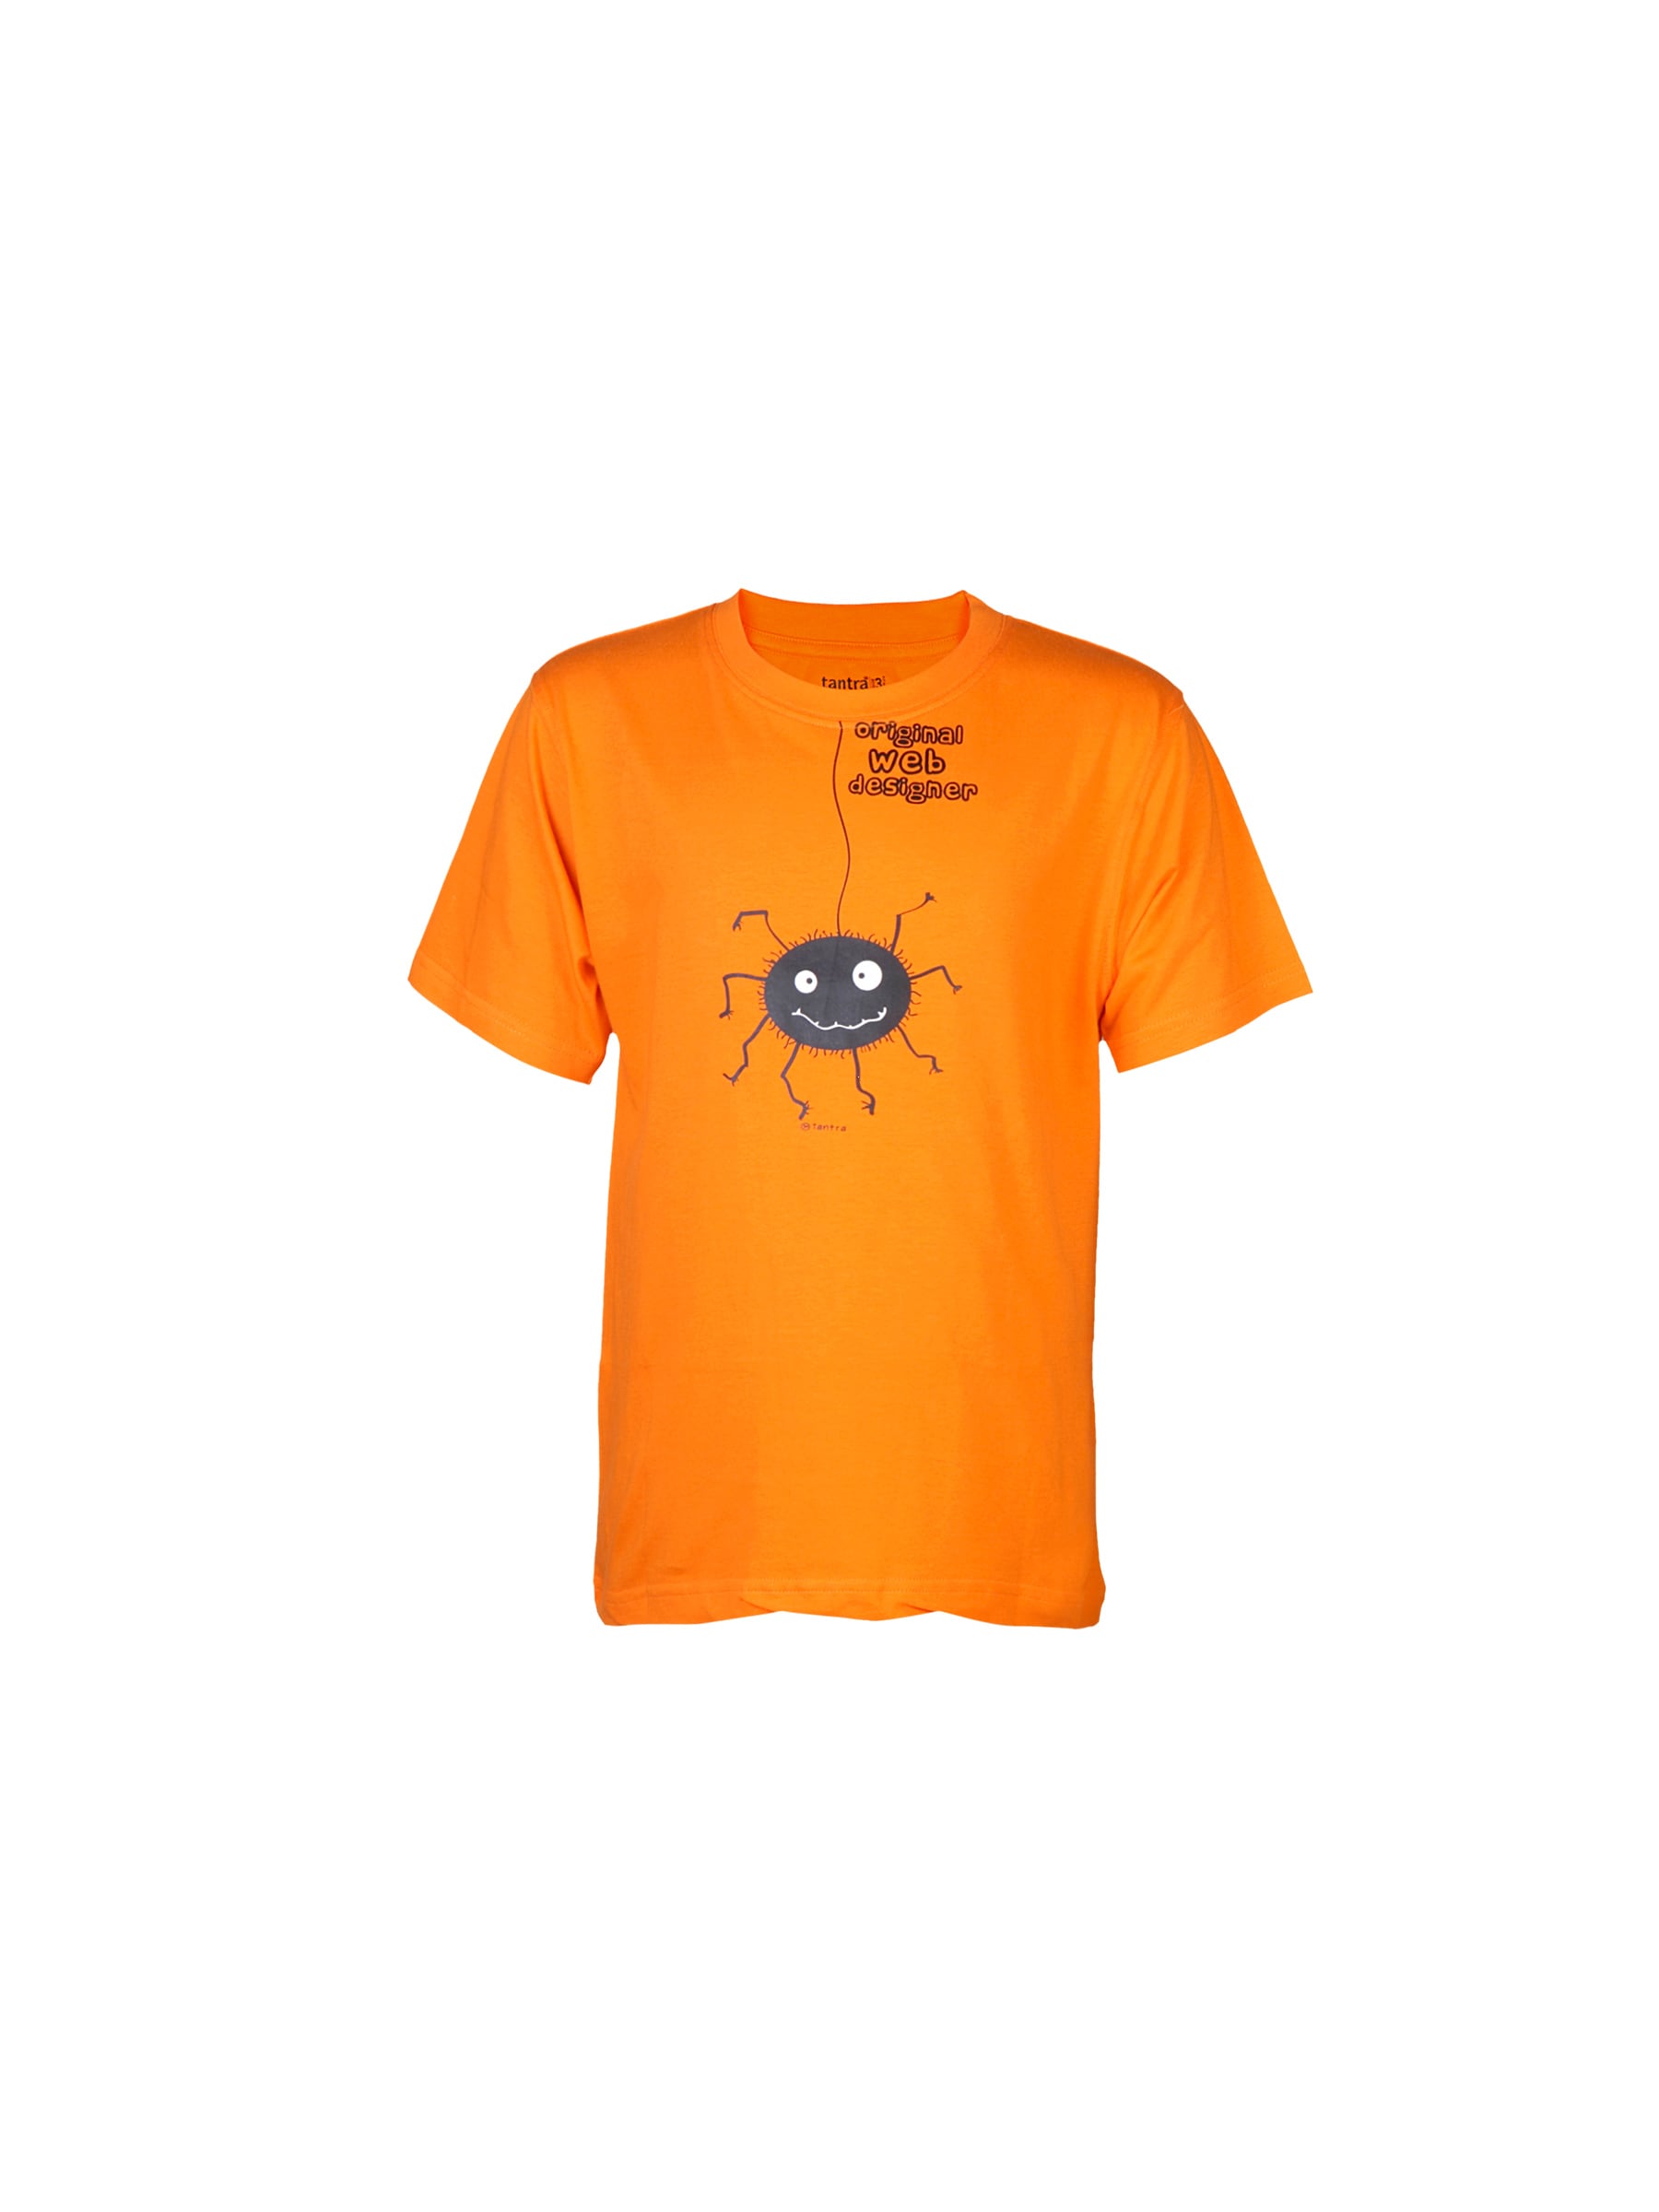 Tantra Unisex Printed Orange Tshirts